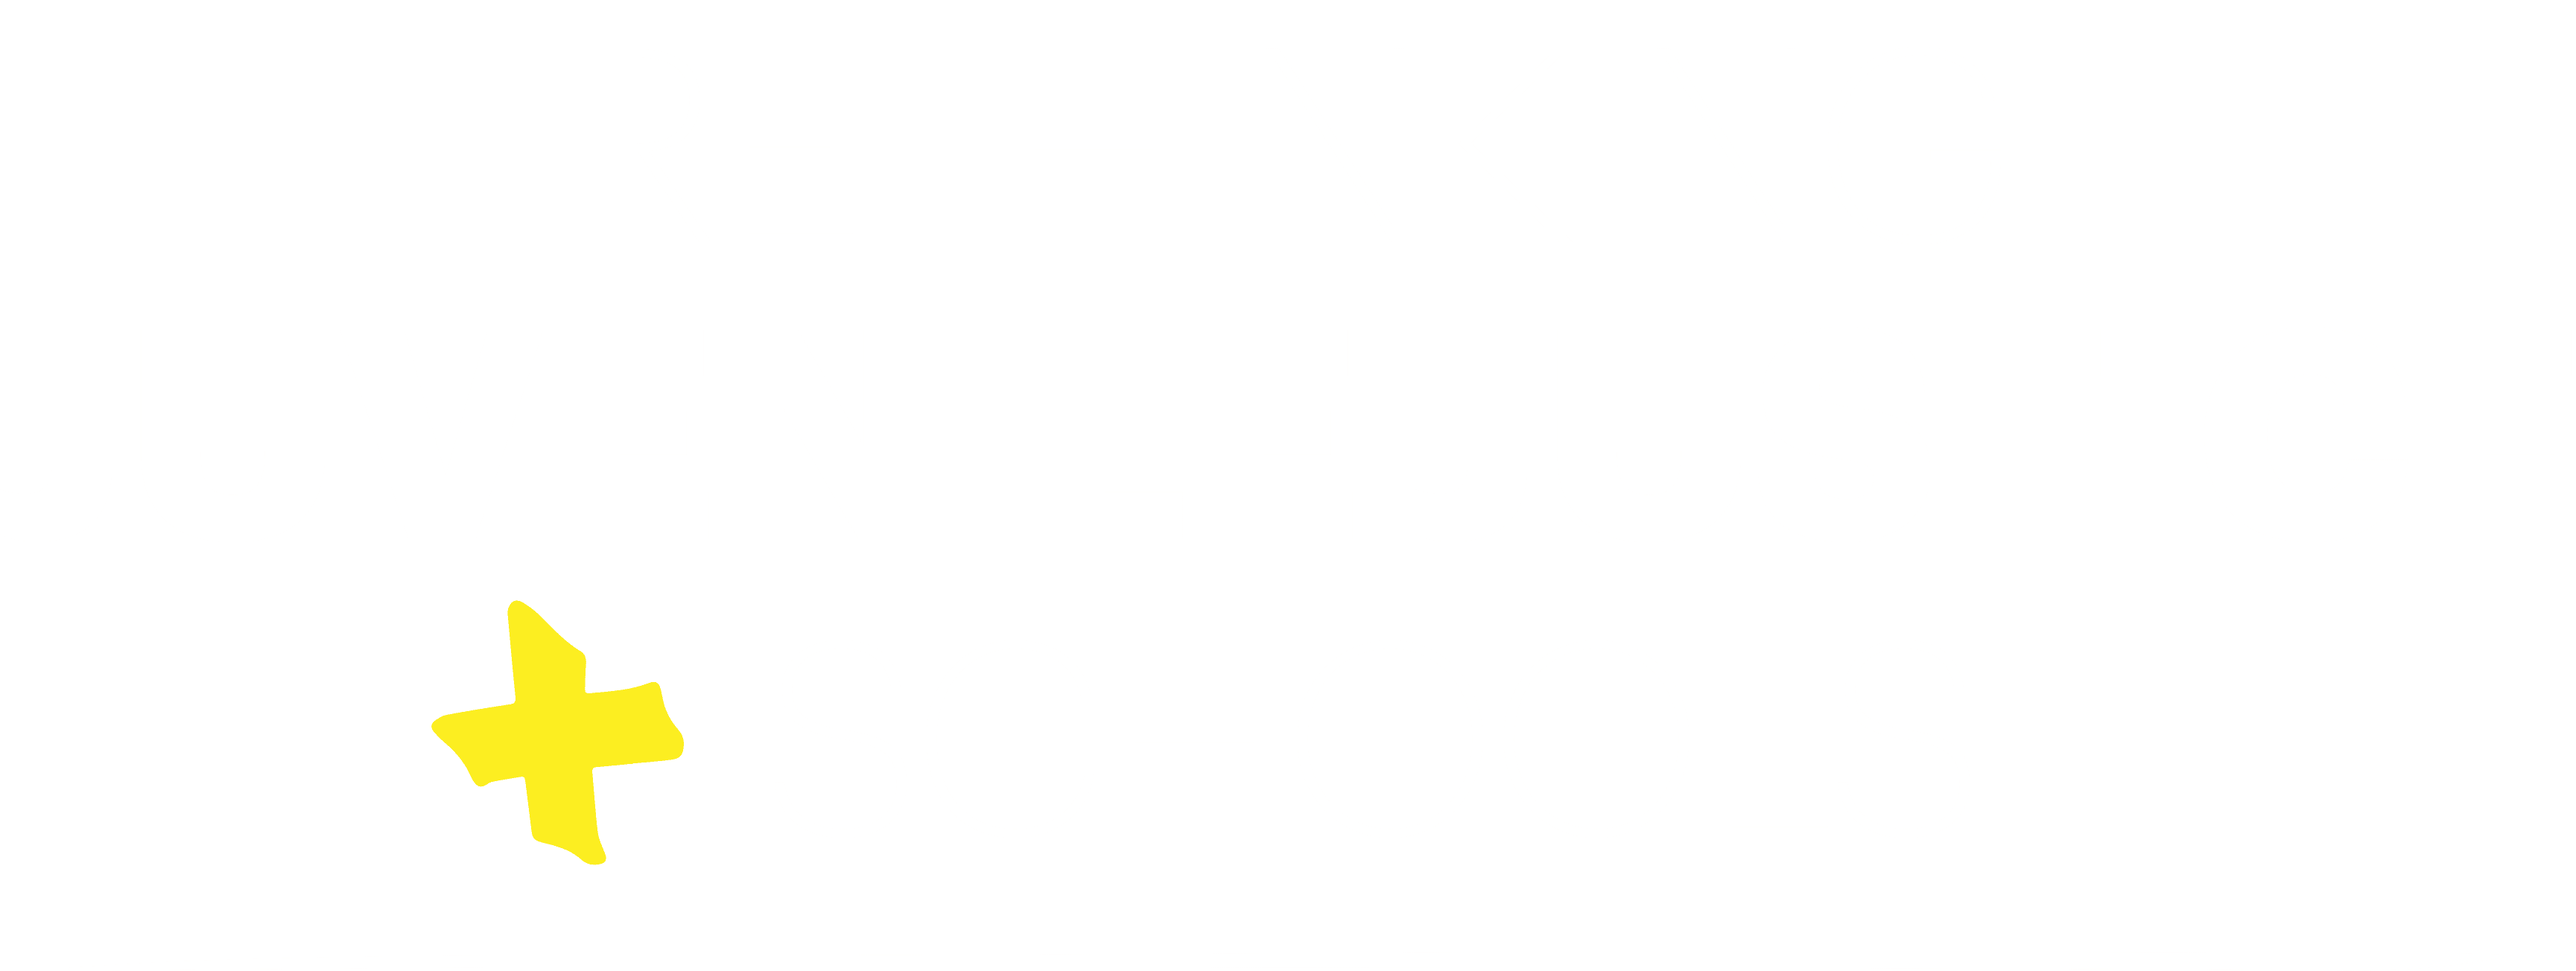 Rethinking Juvenile Justice + Schools